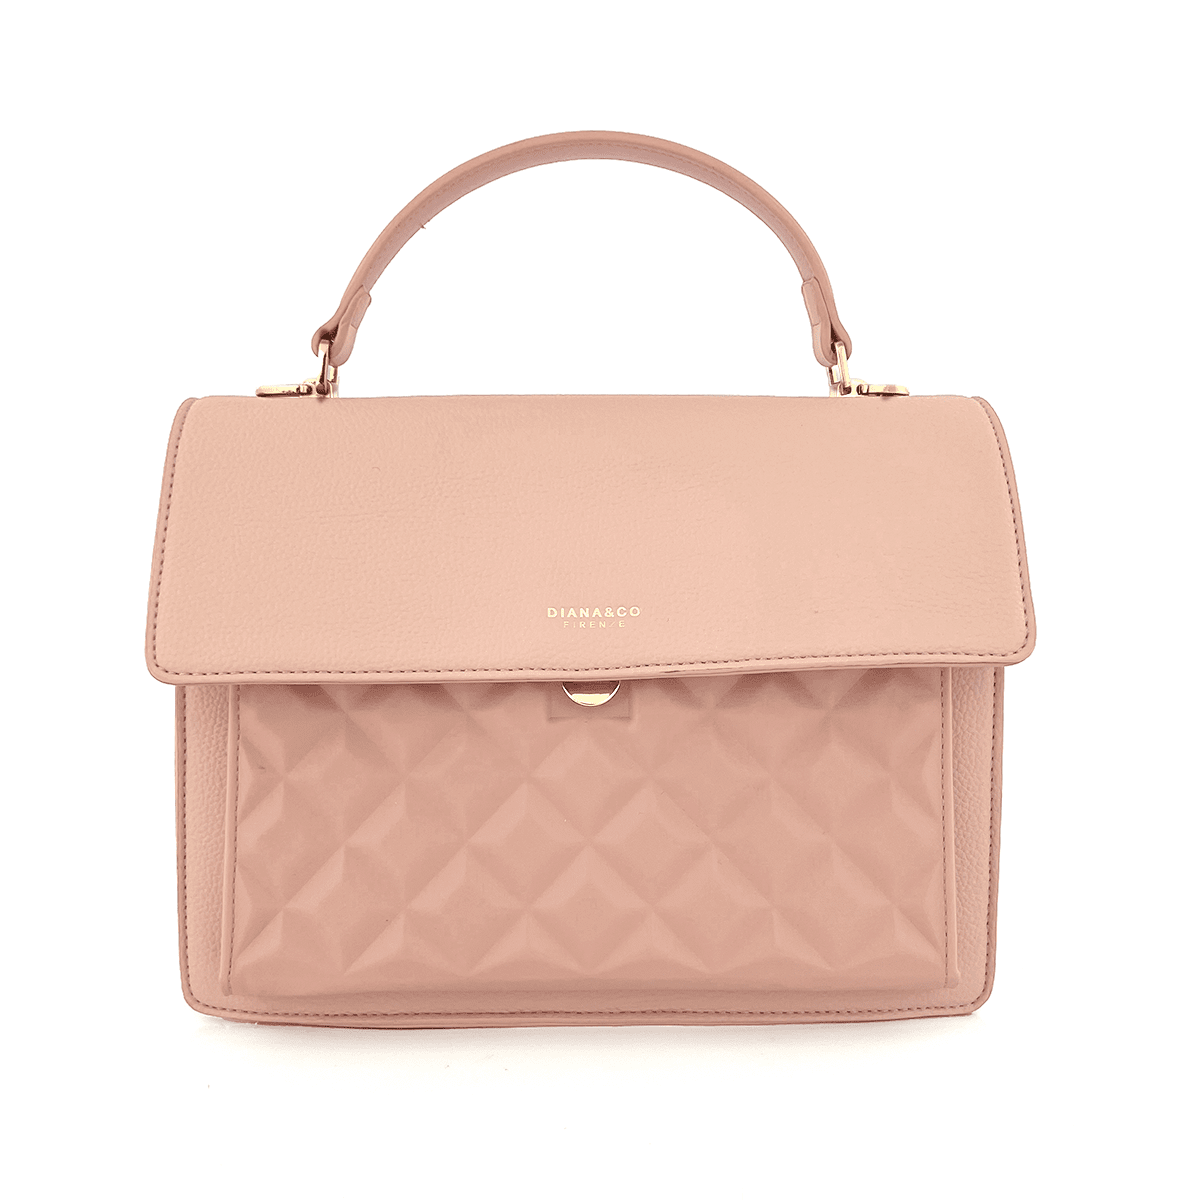 Diana & Co - Луксозна дамска чанта - розова